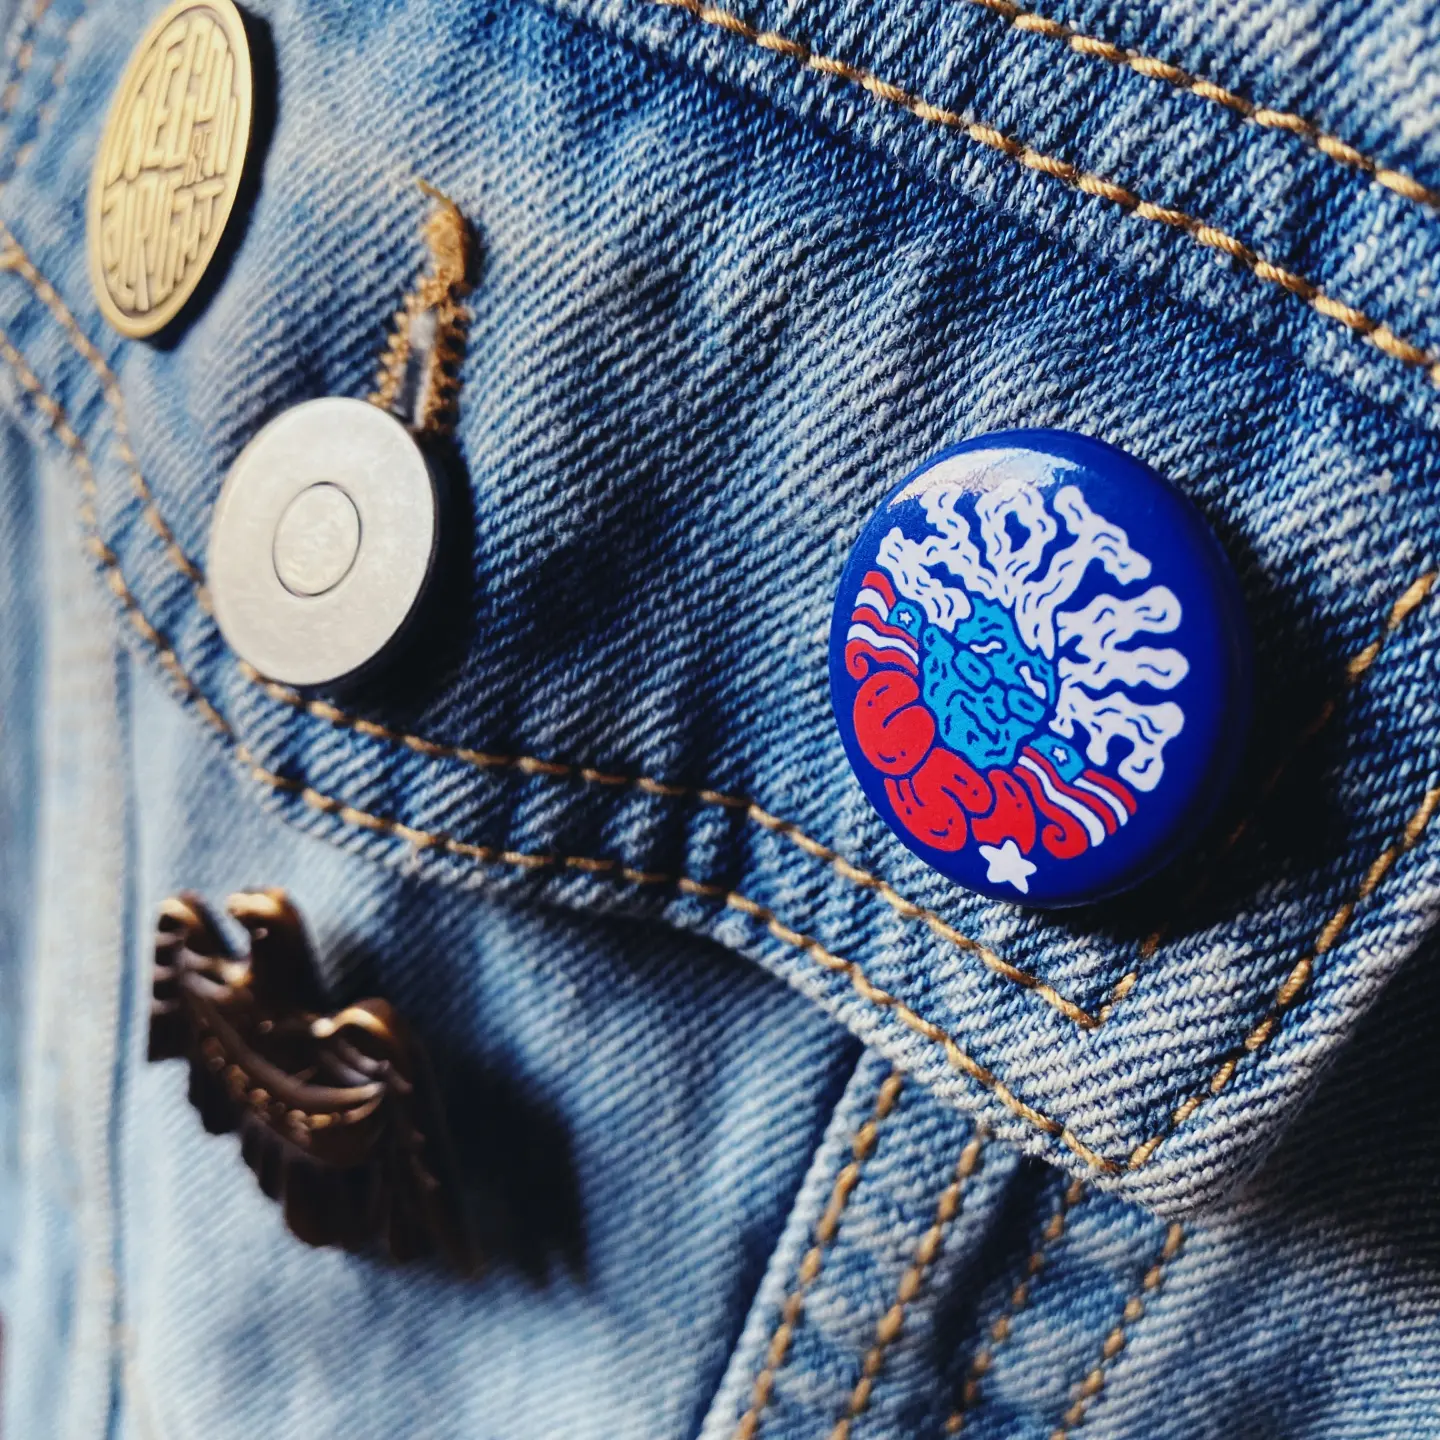 Bernie Sanders button on jacket